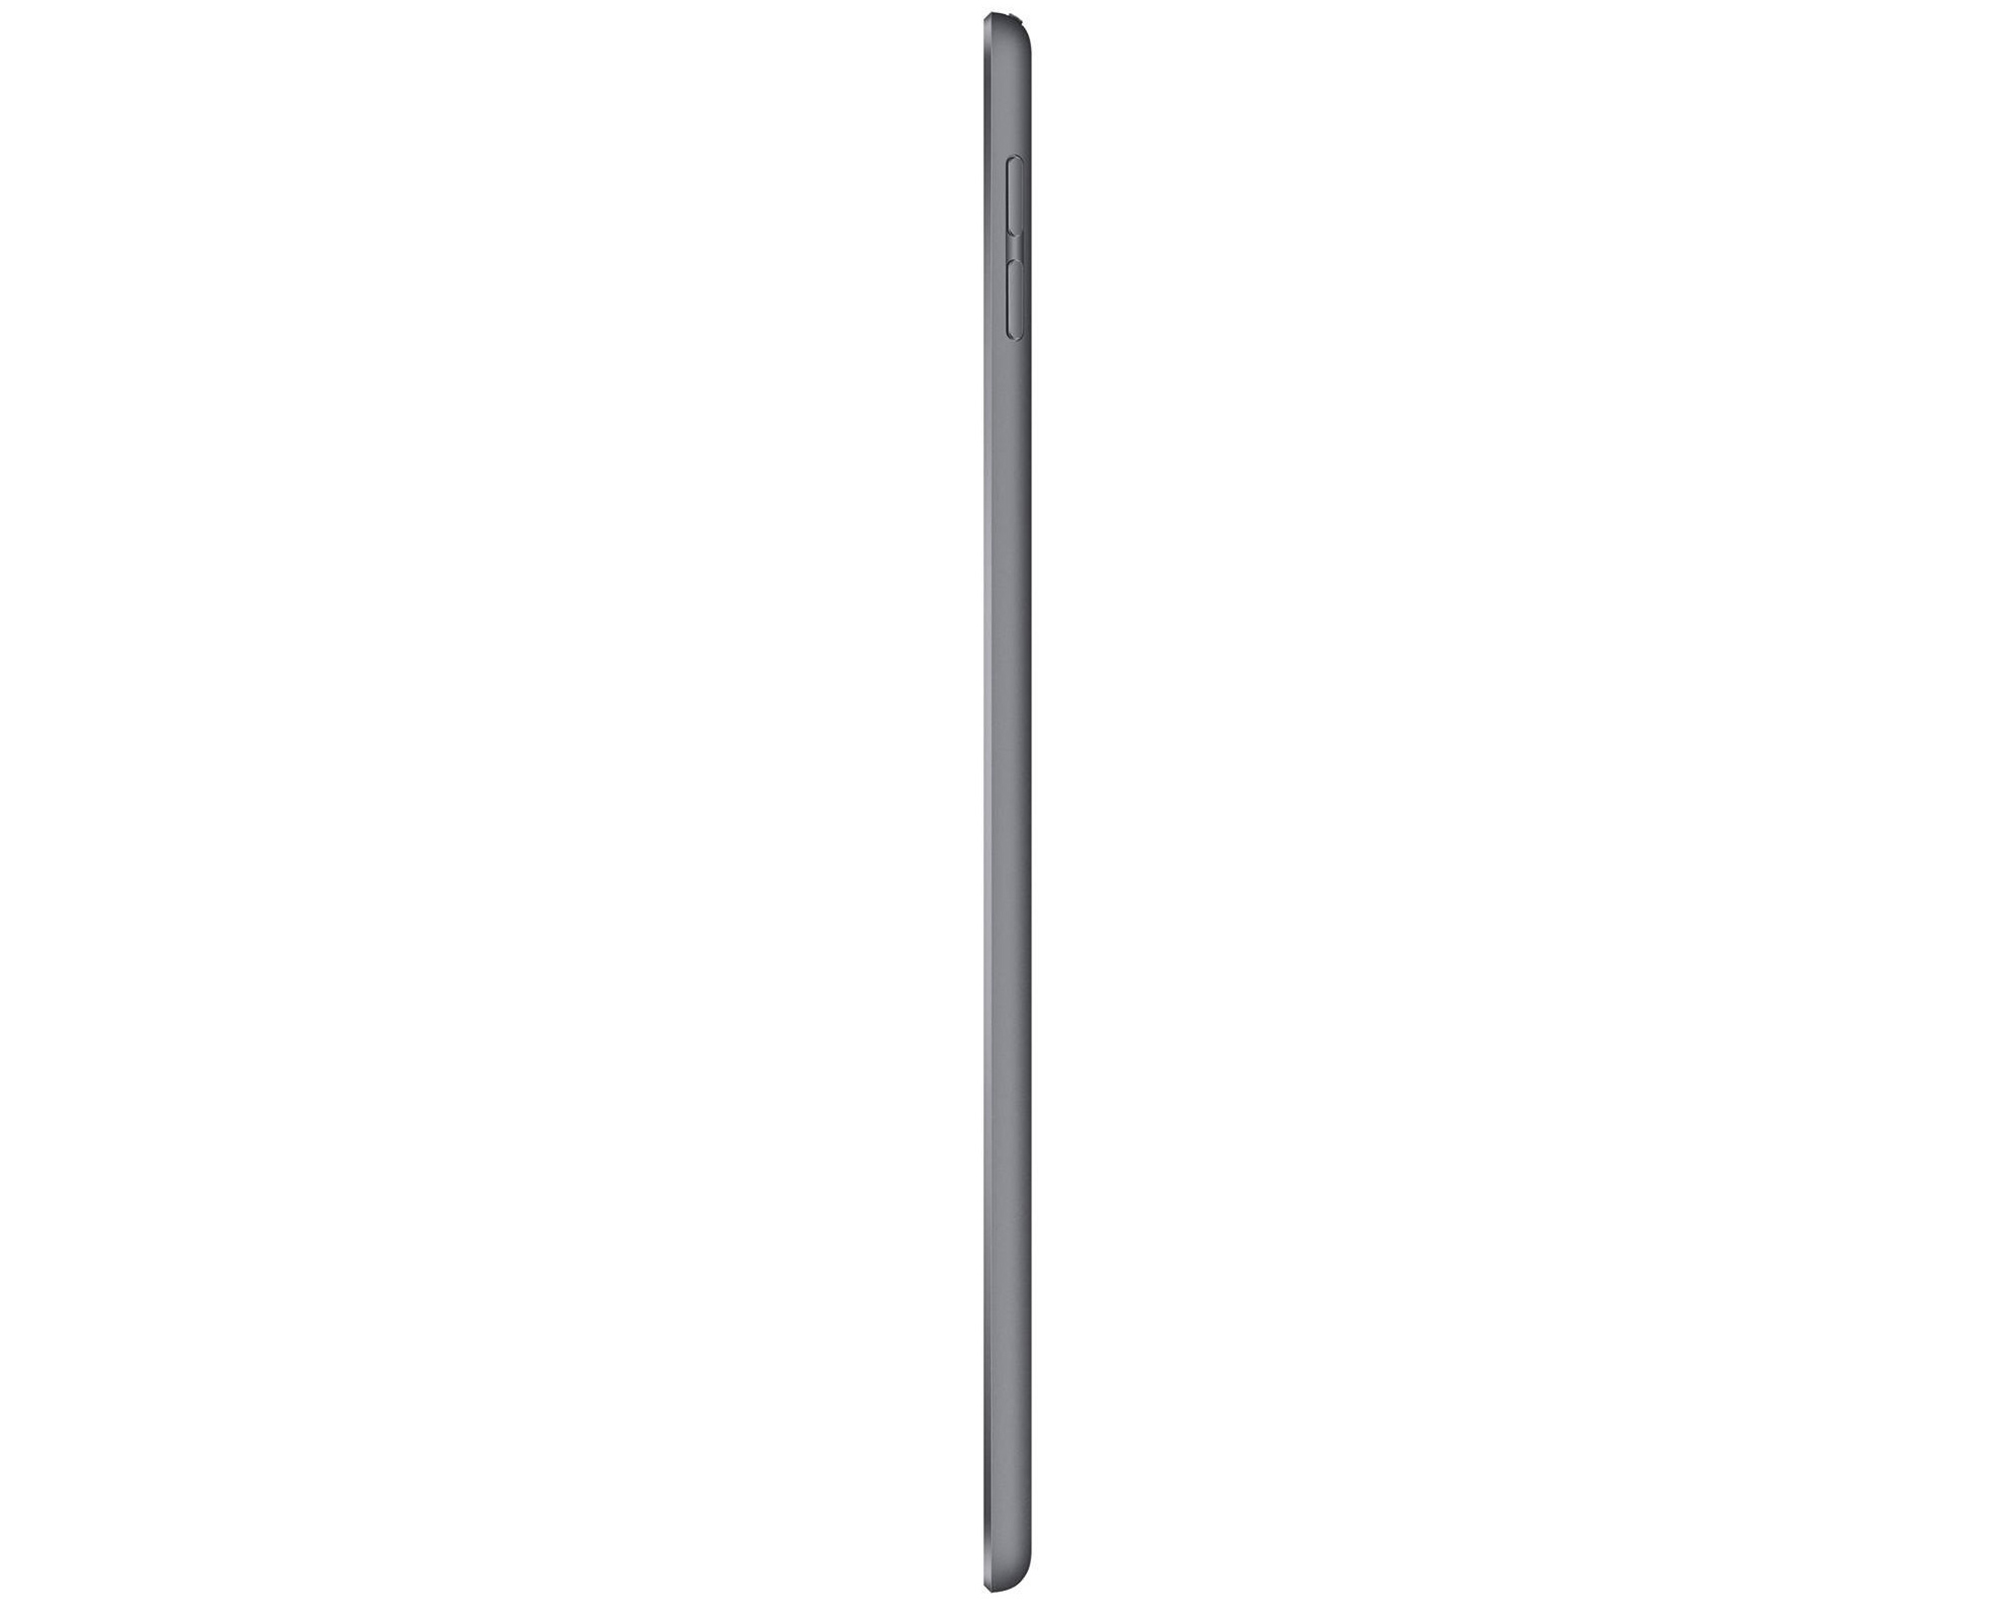 2019 Apple iPad Mini Wi-Fi 256GB - Space Gray (5th Generation) - image 5 of 6